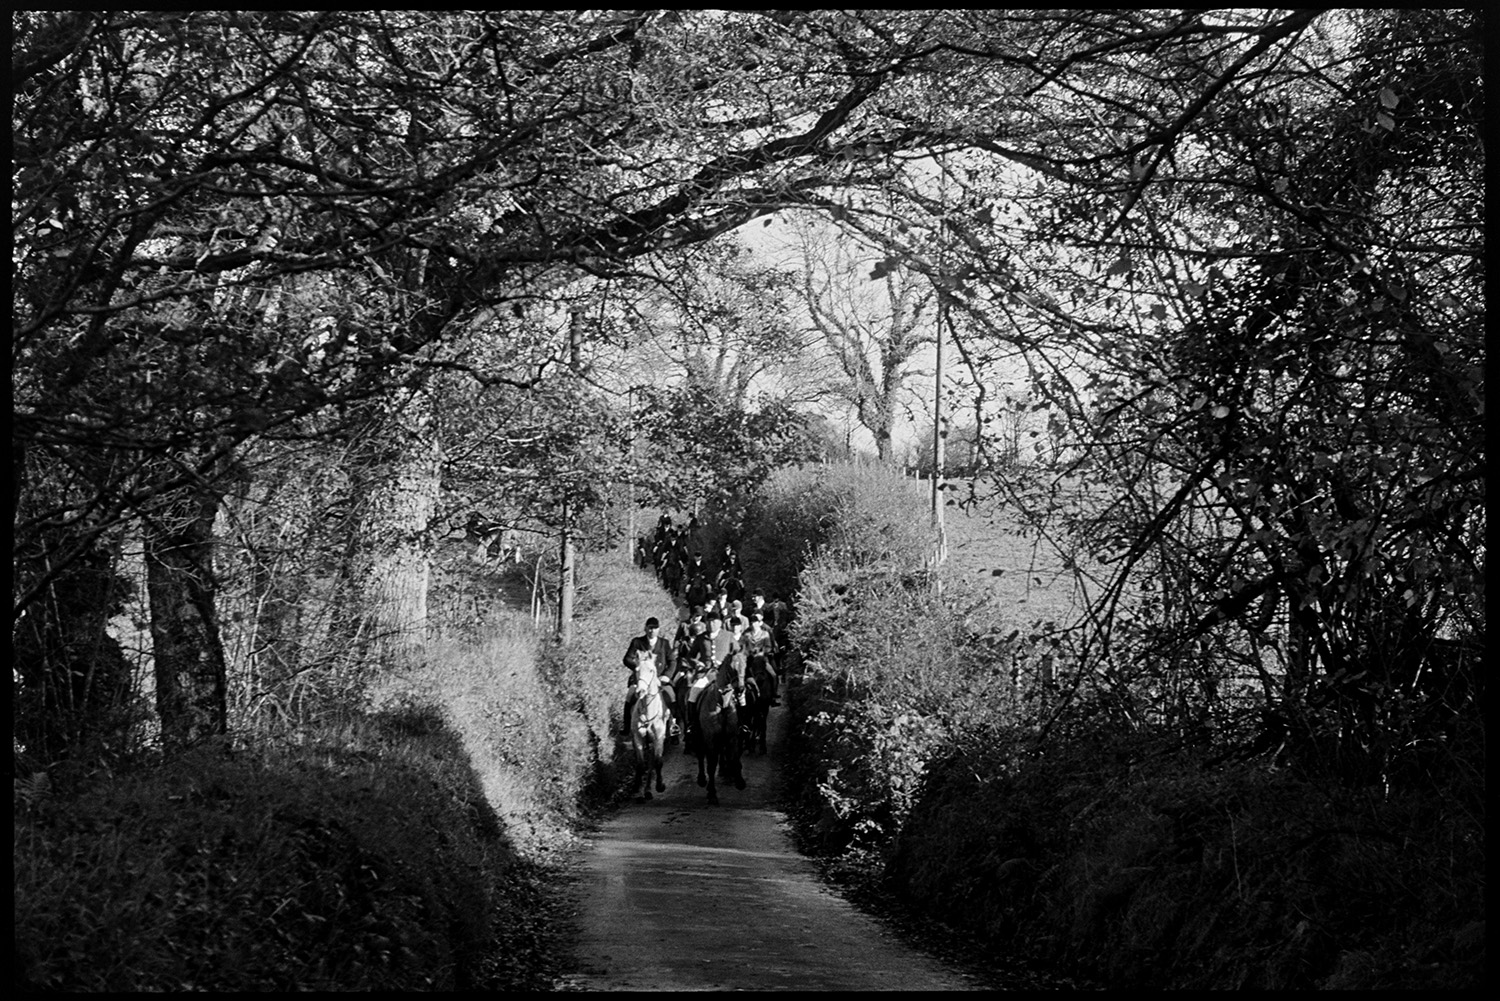 Hunt coming down tree lined lane.
[Huntsmen on horses coming down a sunlit and tree-lined country lane at Addisford, near Dolton.]